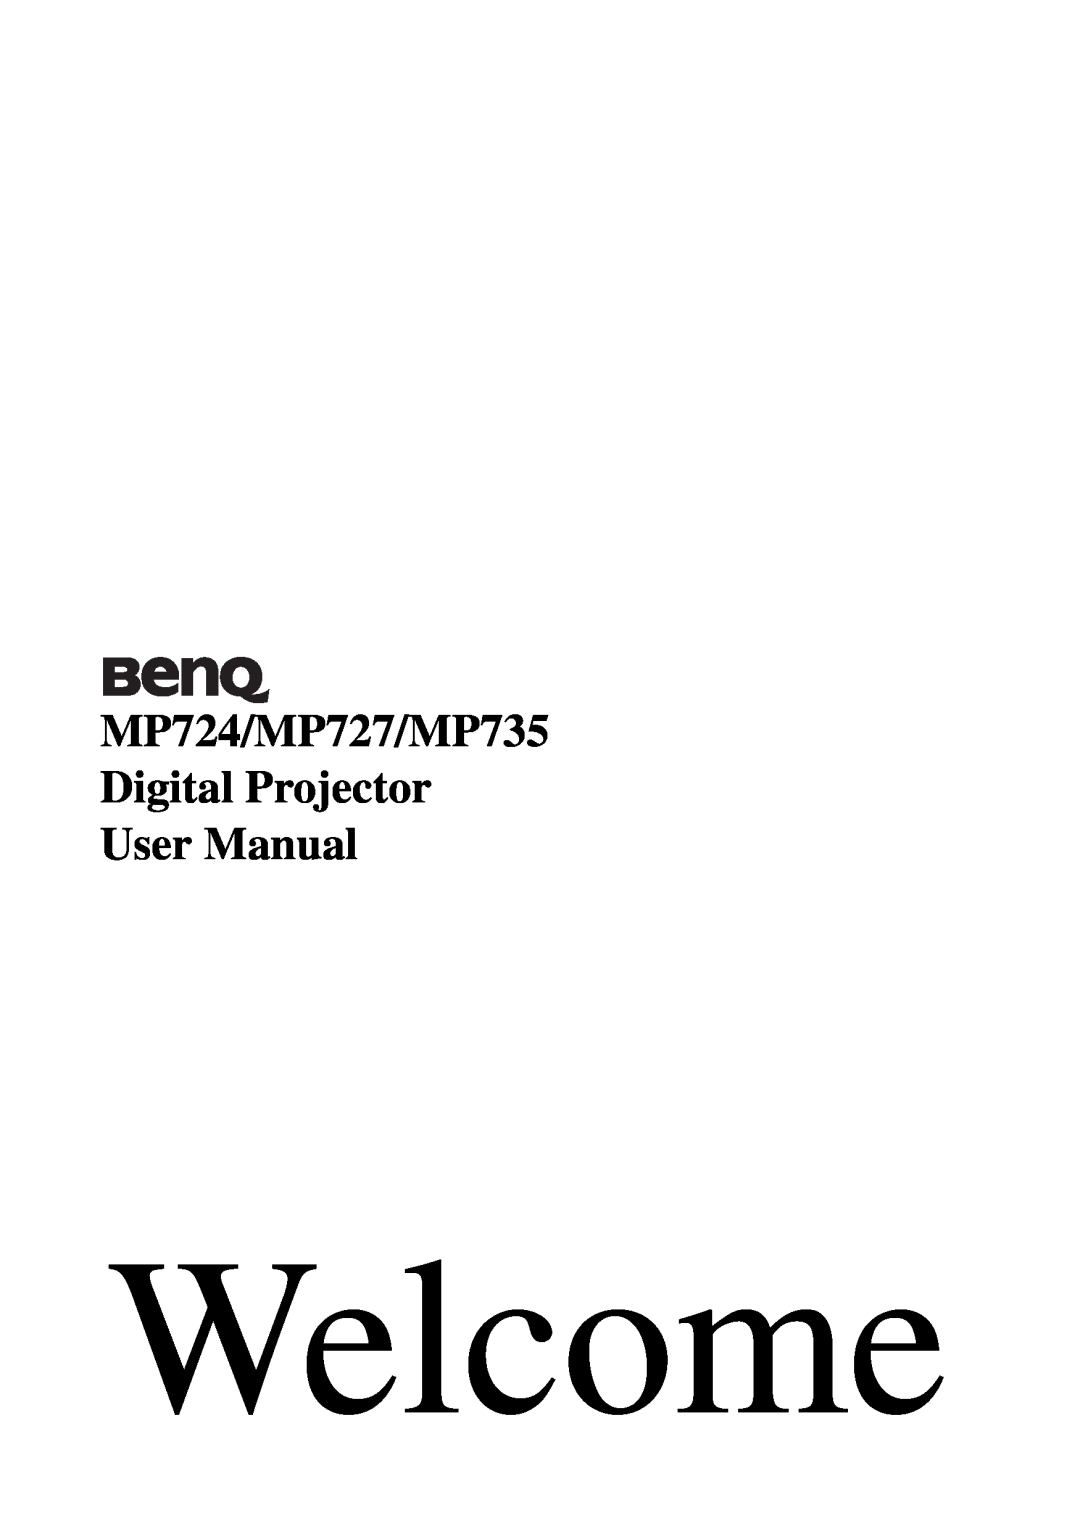 BenQ user manual MP724/MP727/MP735 Digital Projector User Manual, Welcome 